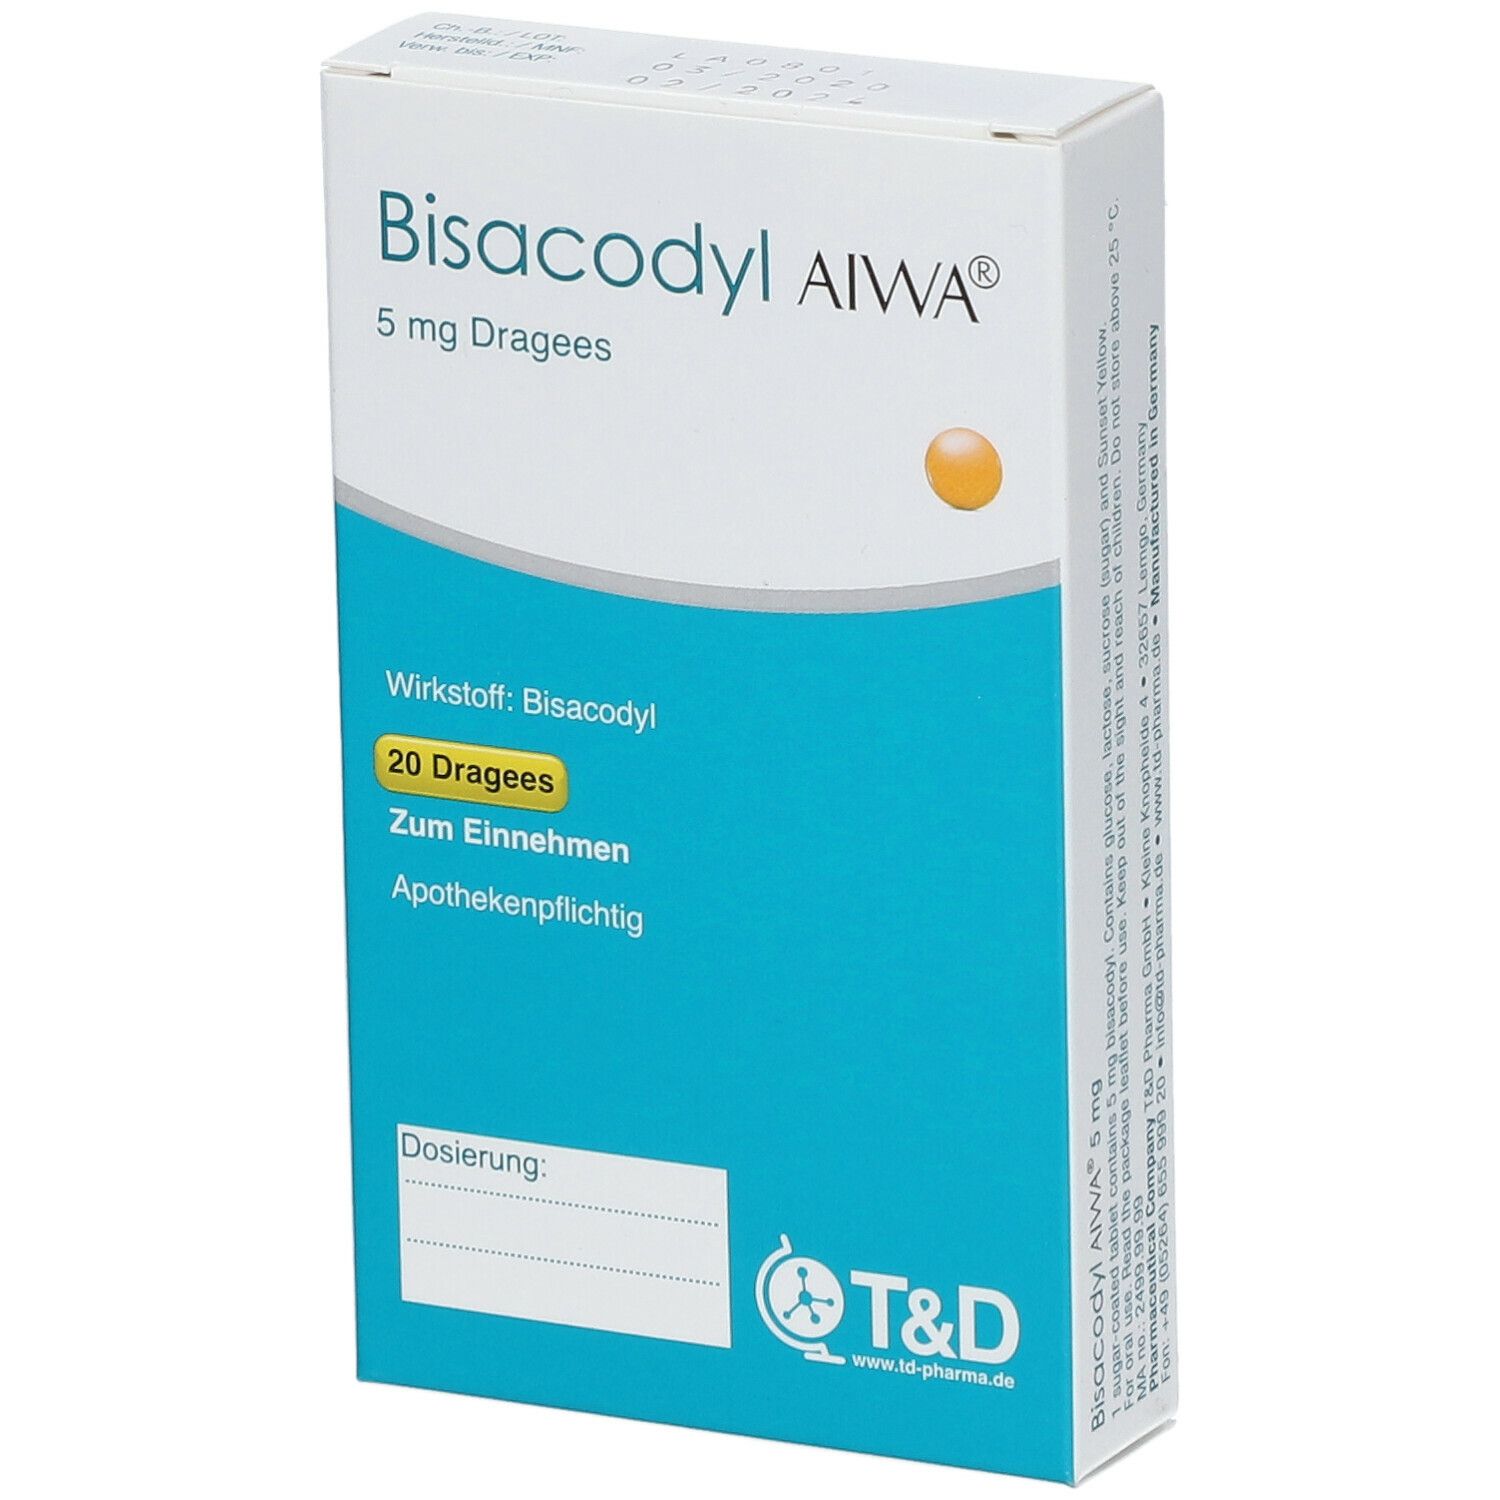 Bisacodyl AIWA® 5 mg